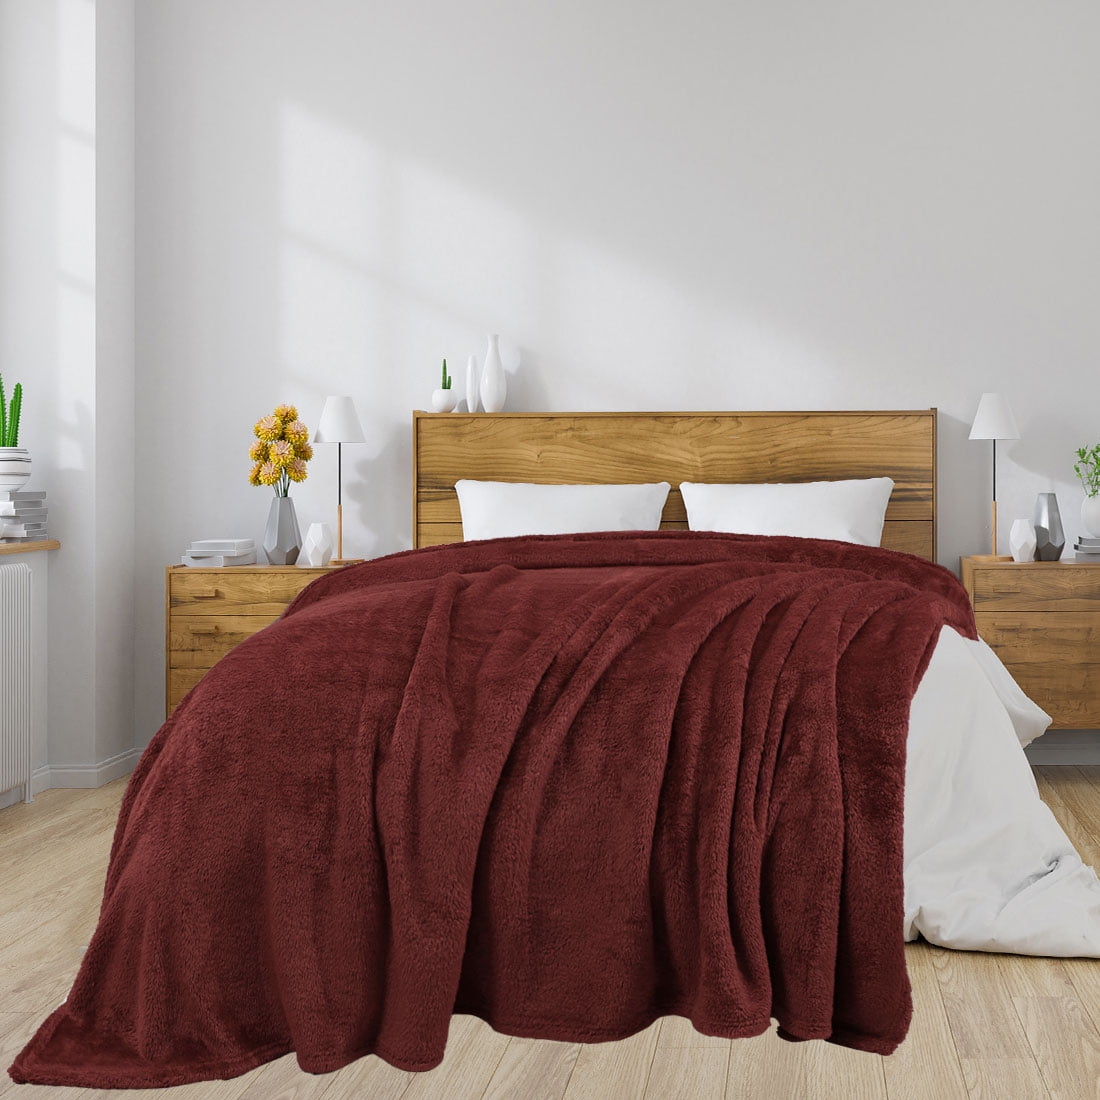 AUISS Plush Throw Velvet Blanket Mount Fuji Warm Fleece Carpet Bedroom Bed for Men Luxurious Sleep Mat Pad Flannel Cover for All Season